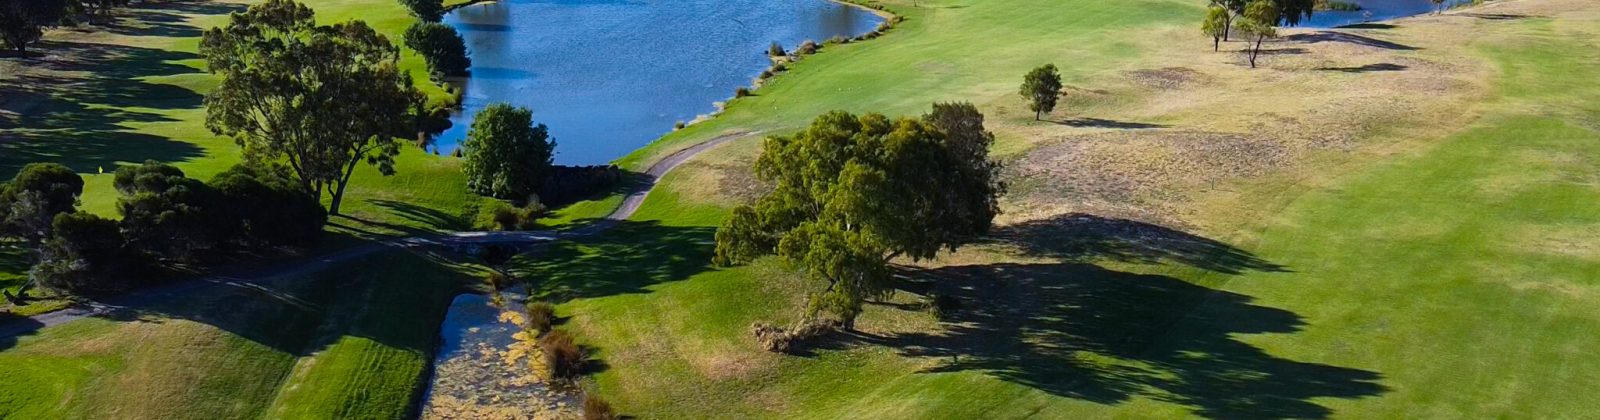 Altona Lakes Golf Course Buyers Agent Wendy Chamberlain Melbourne